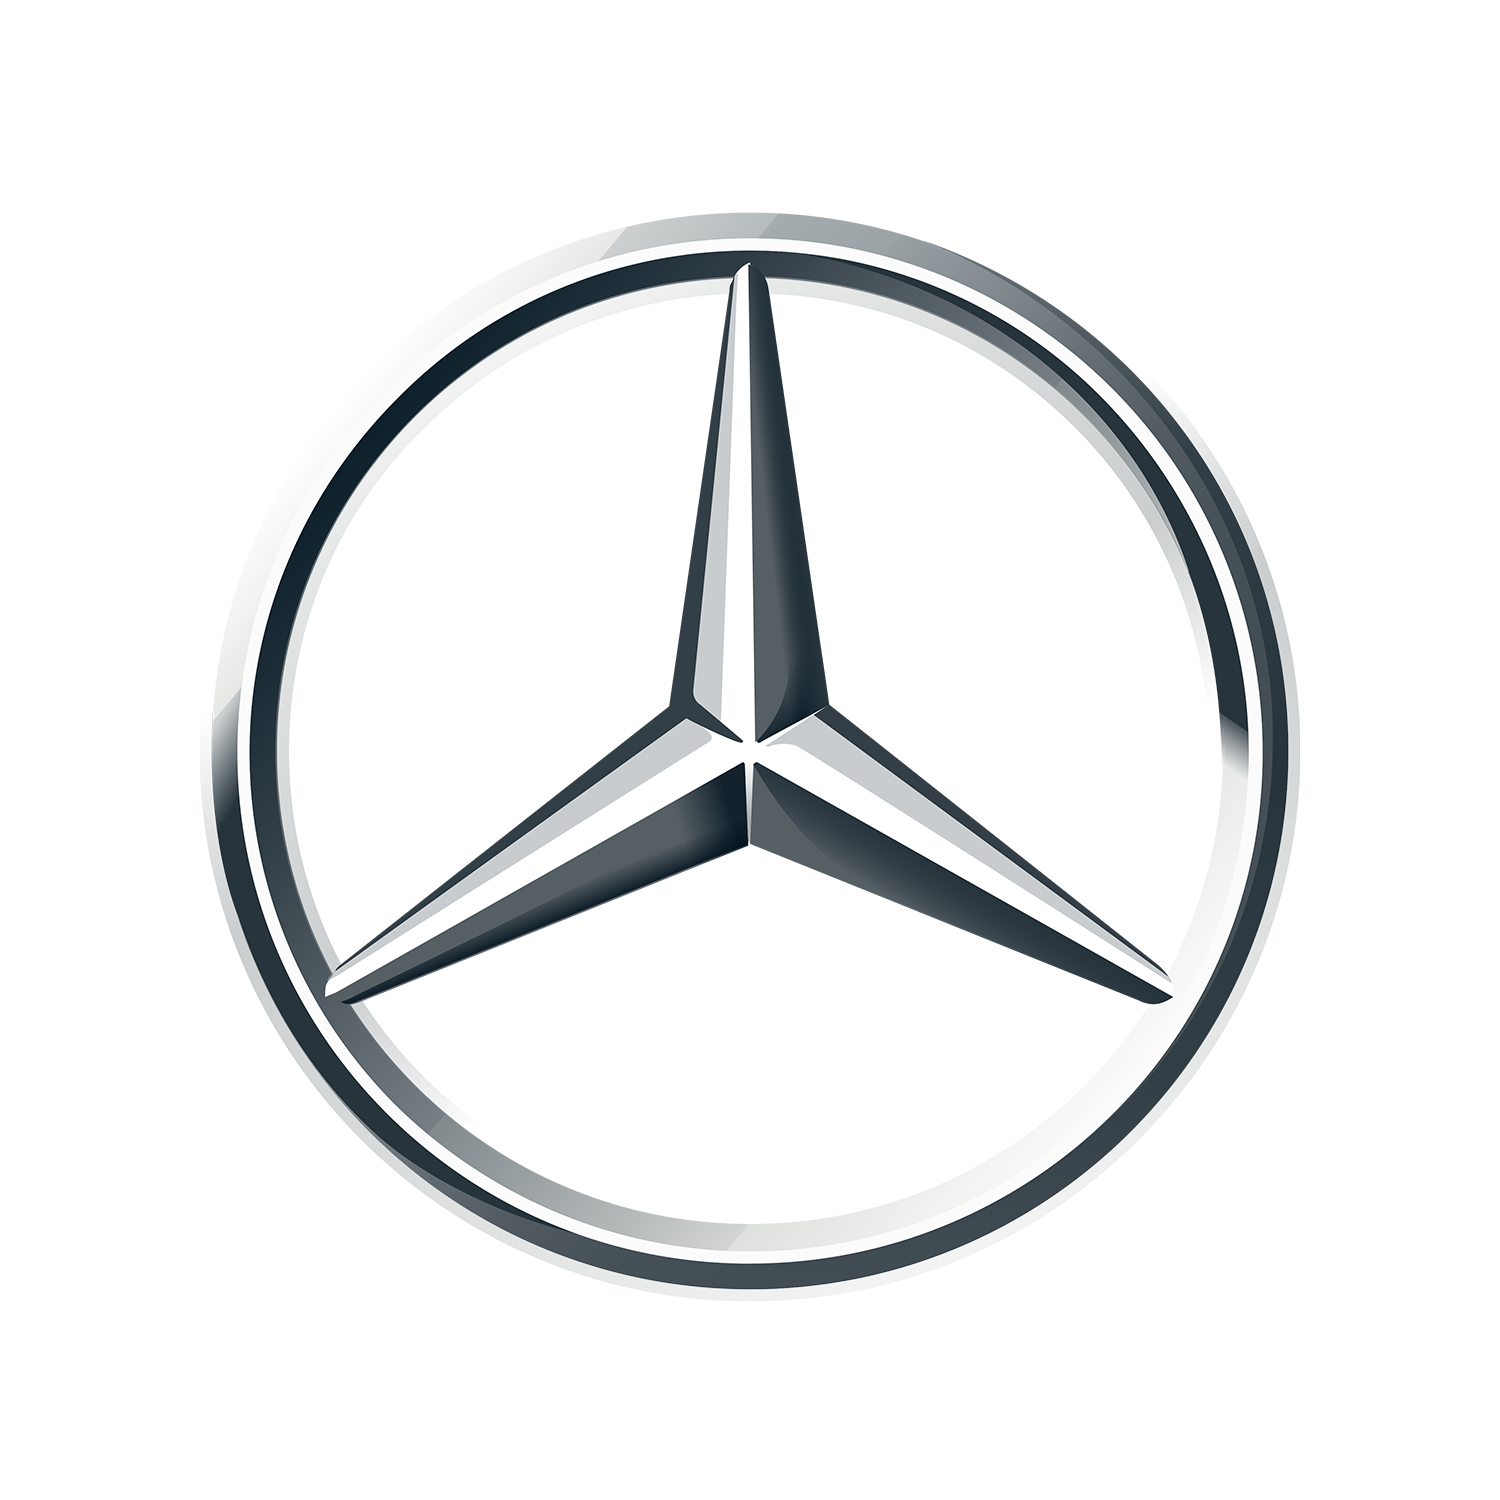 Genuine Mercedes Benz Parts, Mercedes Parts Dealer